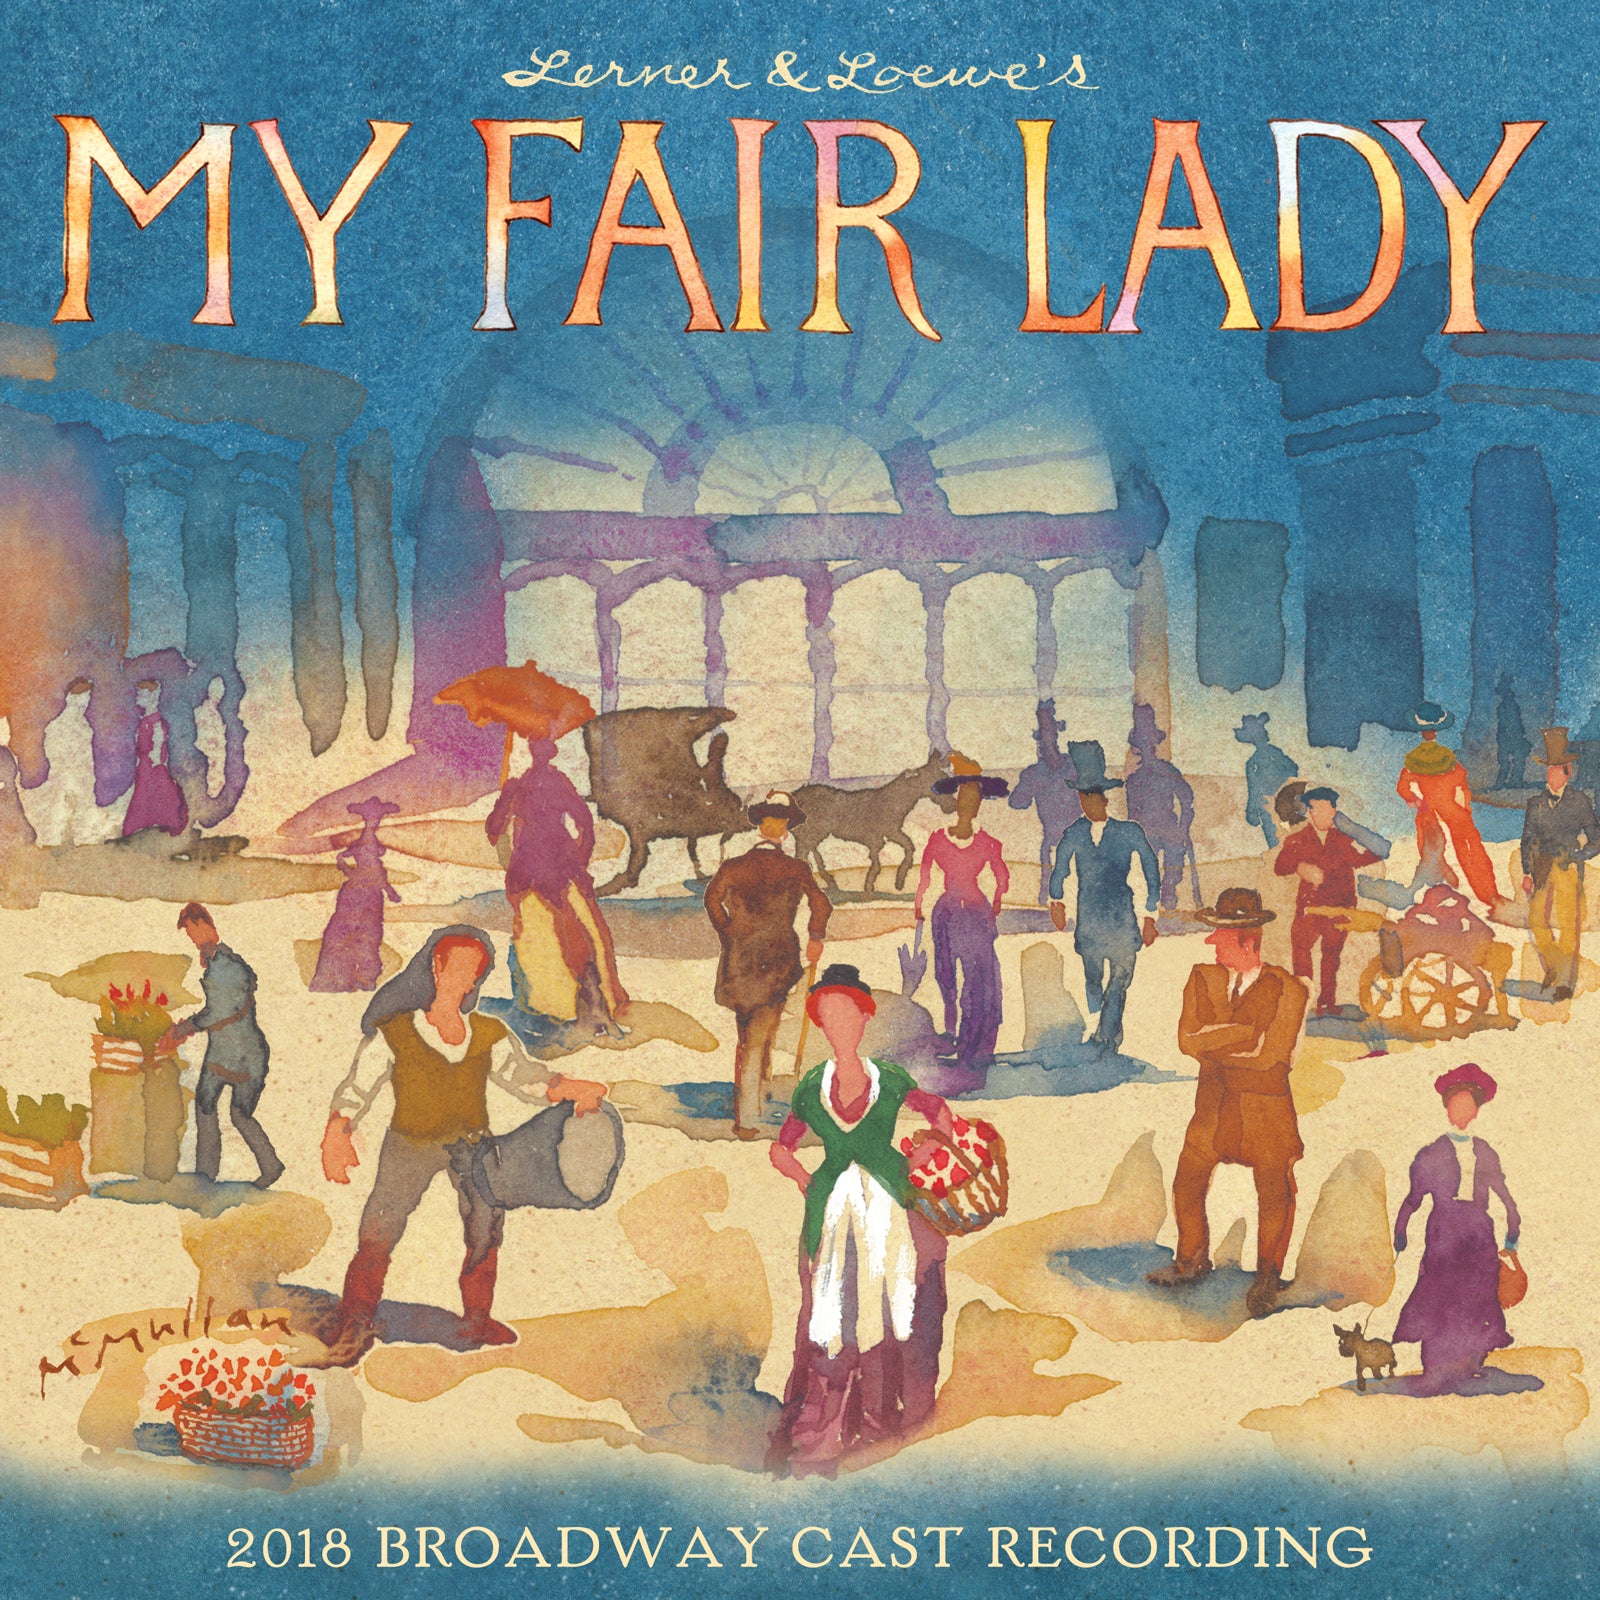 My Fair Lady – Original Broadway Cast Recording 1956 - The